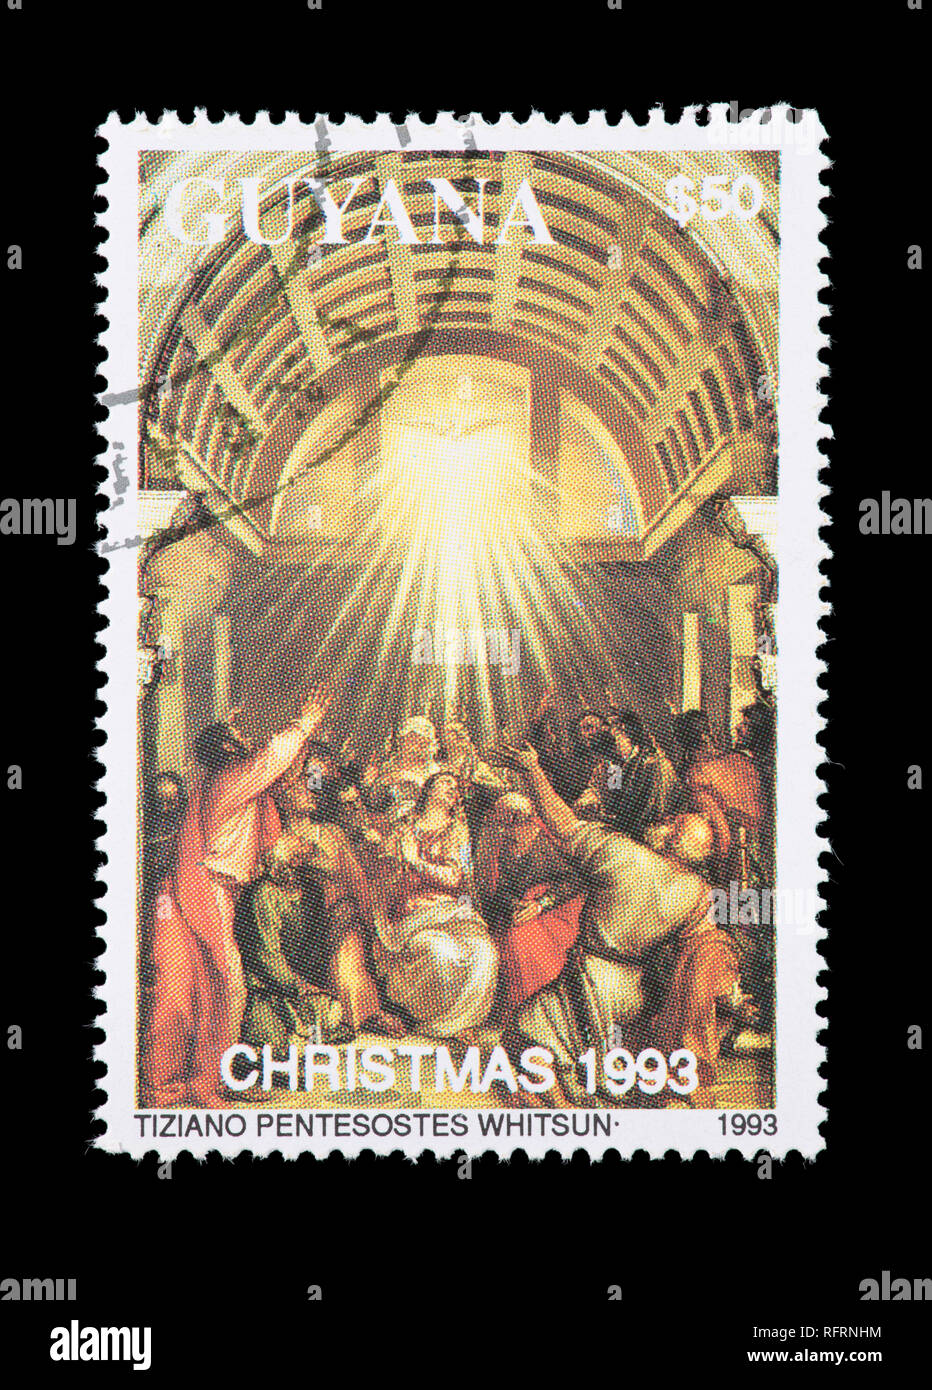 Sello de Guyana representando la pintura Tiziano Pentecostés. Foto de stock